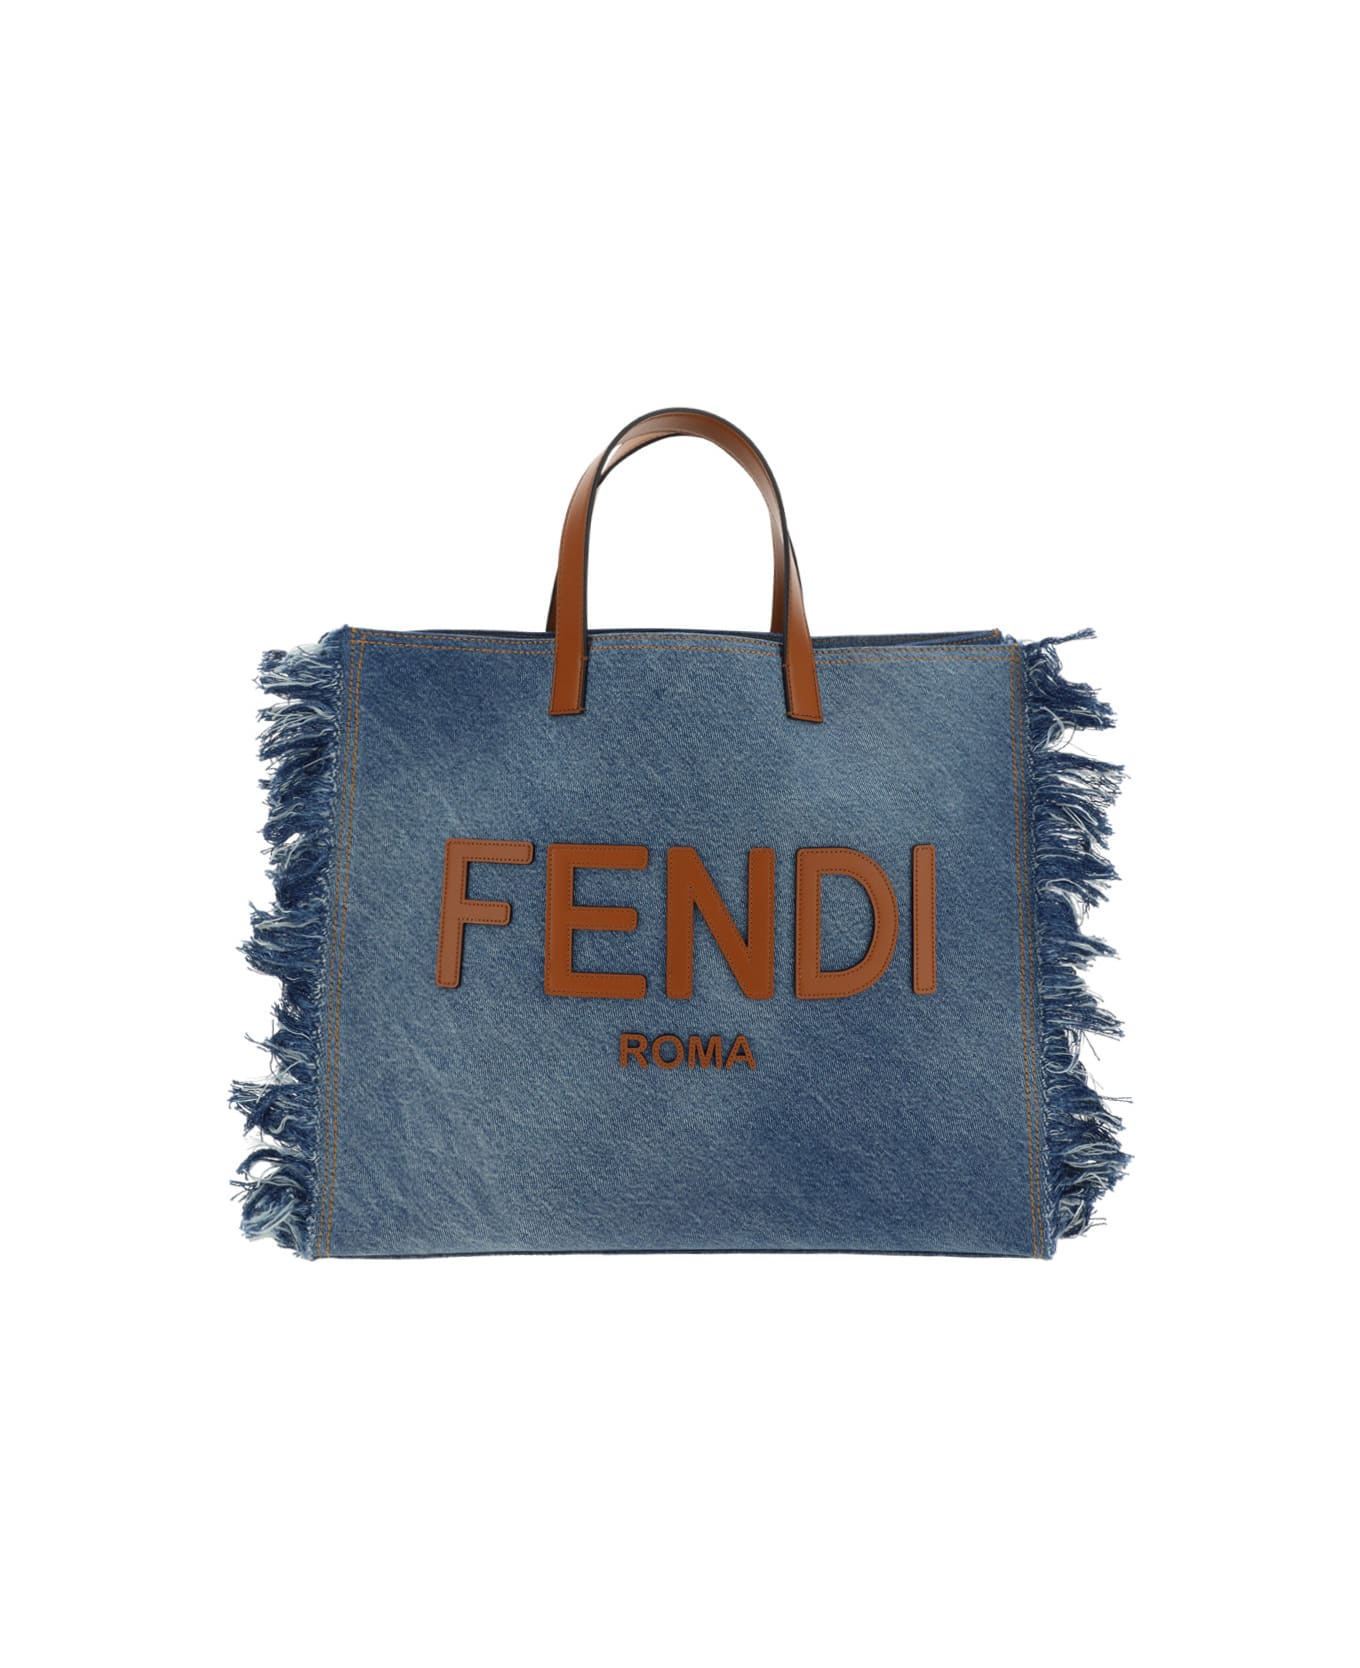 Fendi Tote Handbag - Denim Chiaro/cuoio/p